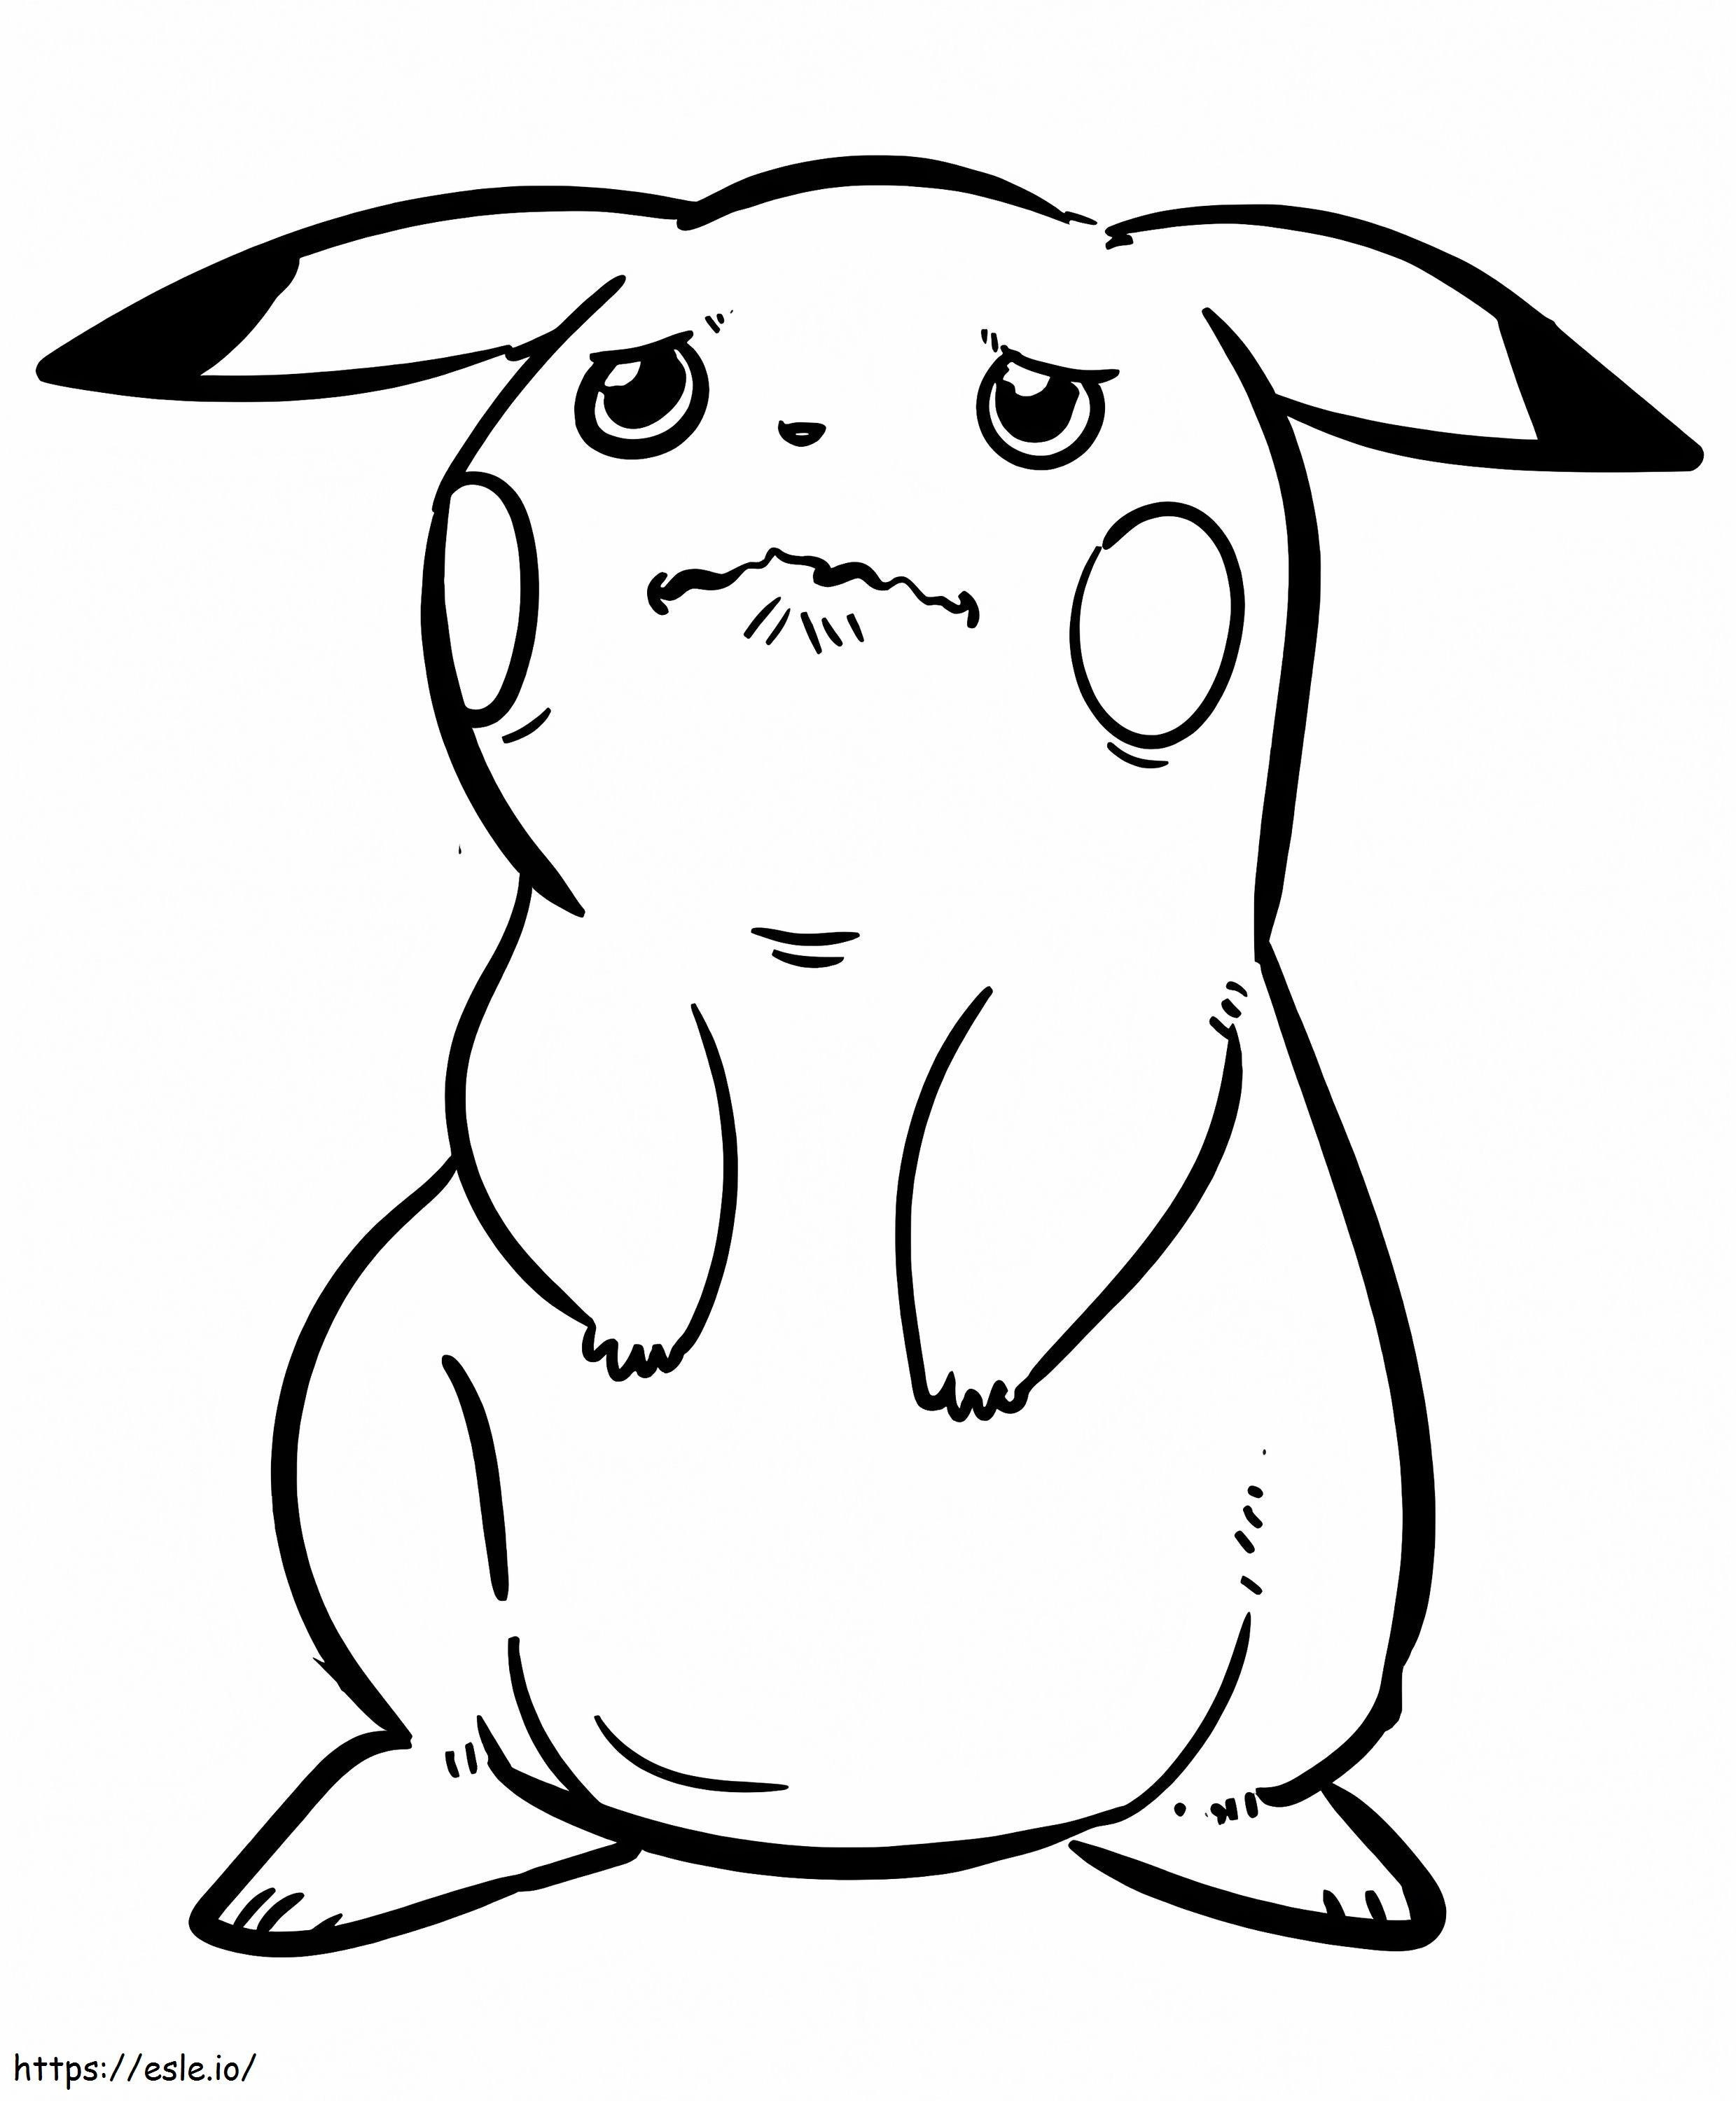 Pikachu Triste coloring page